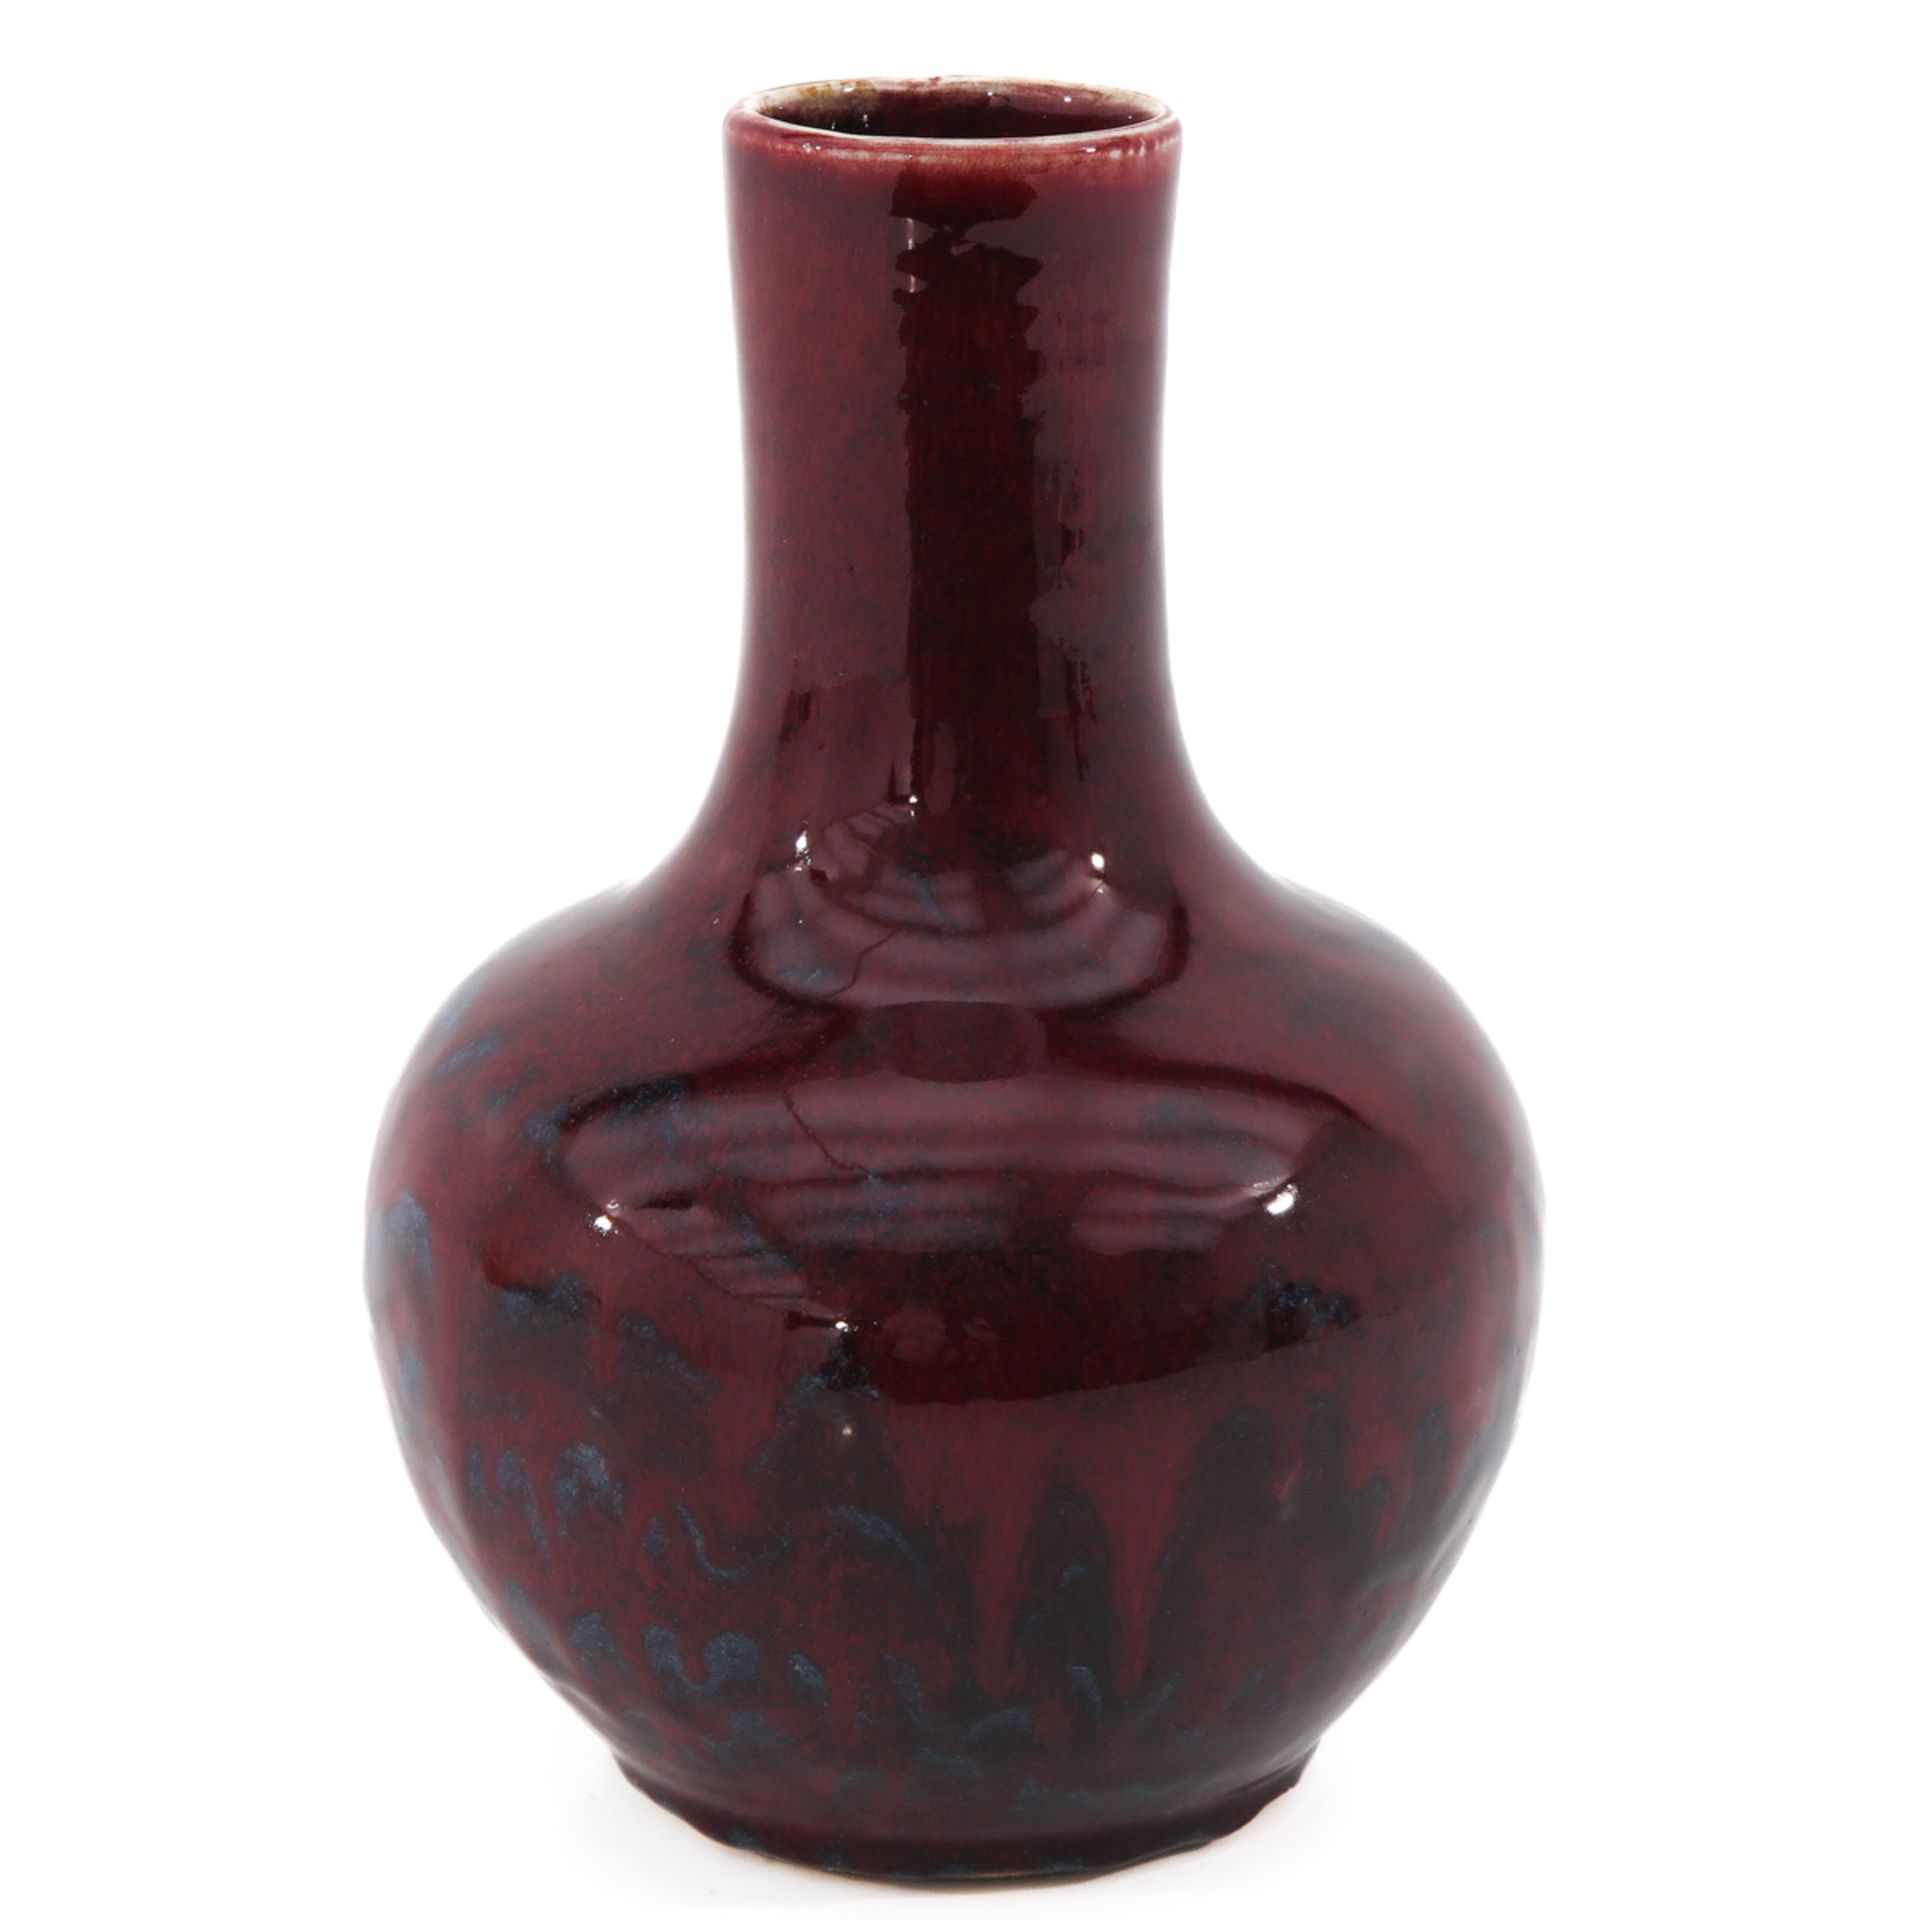 A Flambe Decor Vase